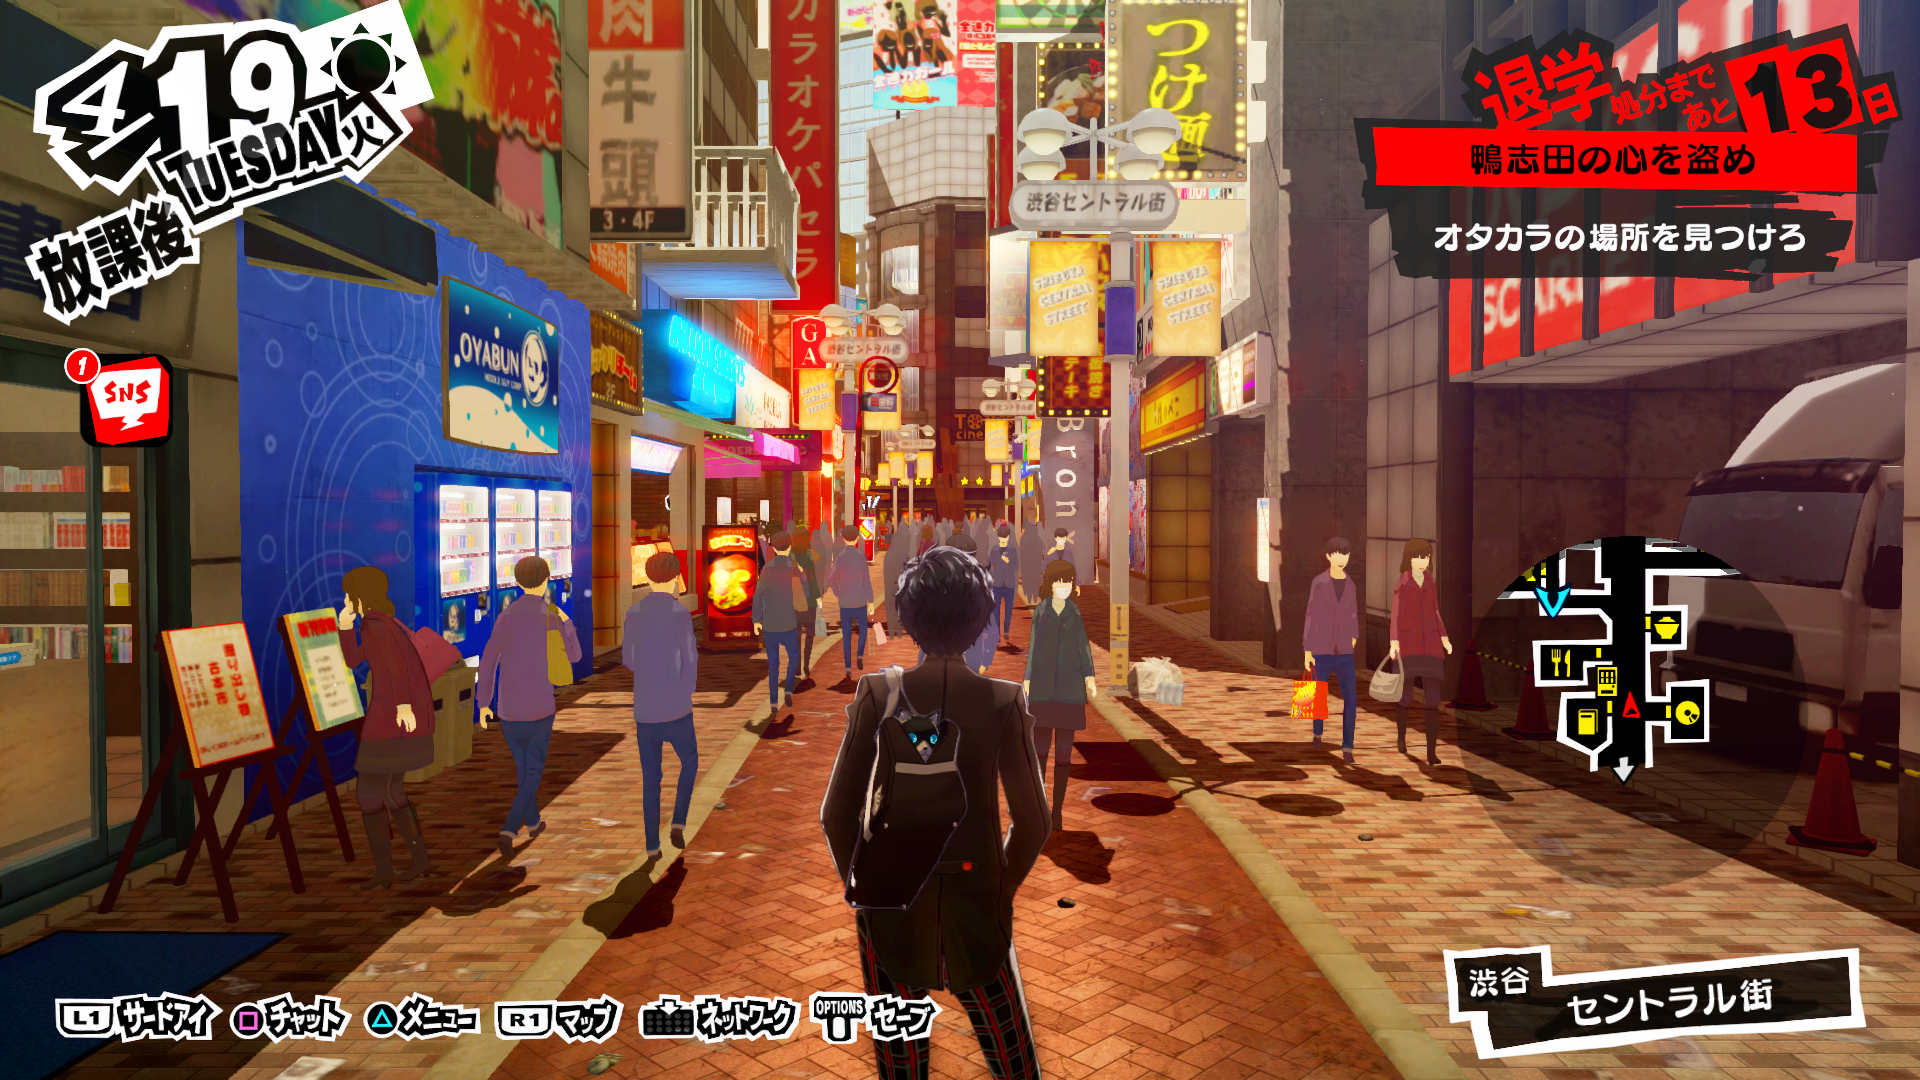 Persona 5 PS4 vs. PS3 comparison screenshots - Gematsu